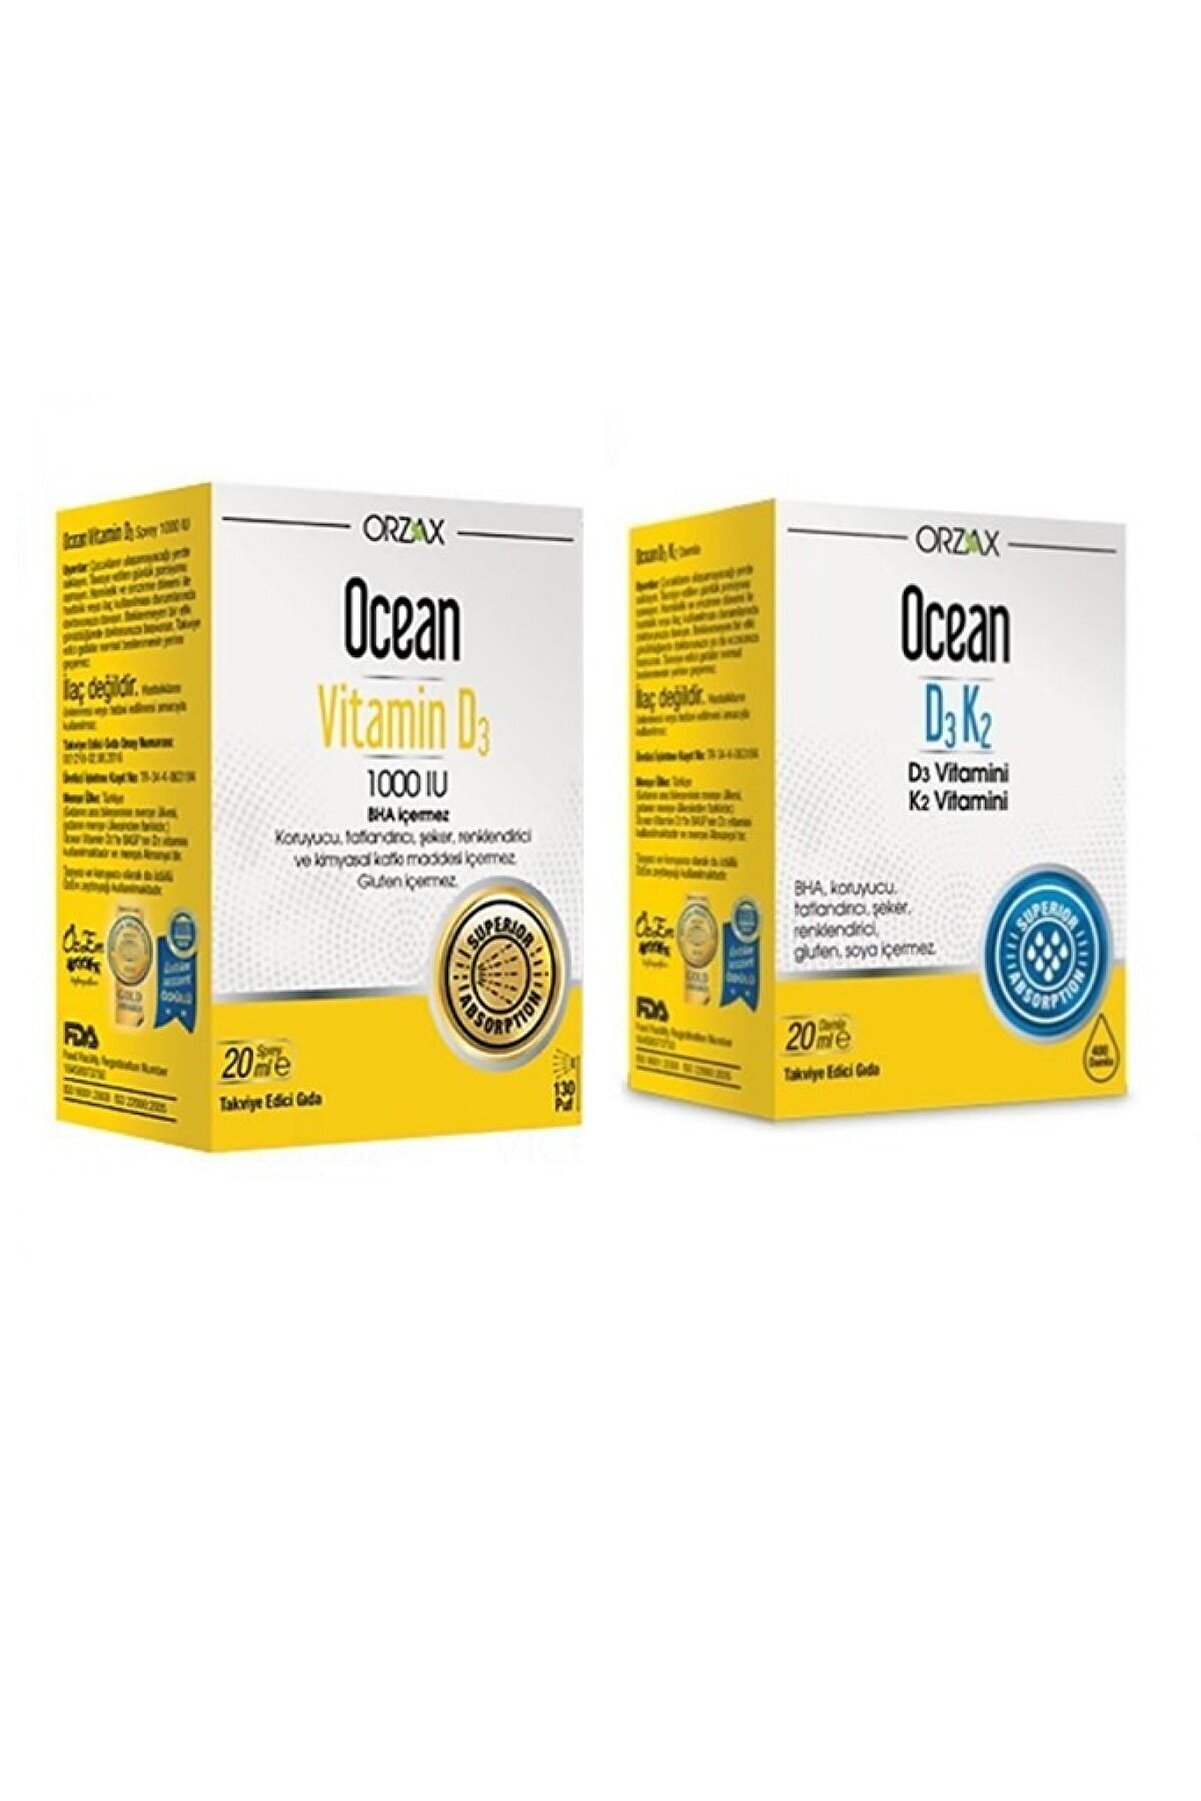 Ocean D3 Vitamini Ocean Vitamin D3 1000 Iu Sprey 20 ml Ve D3 K2 Vitamin Damla 20 ml